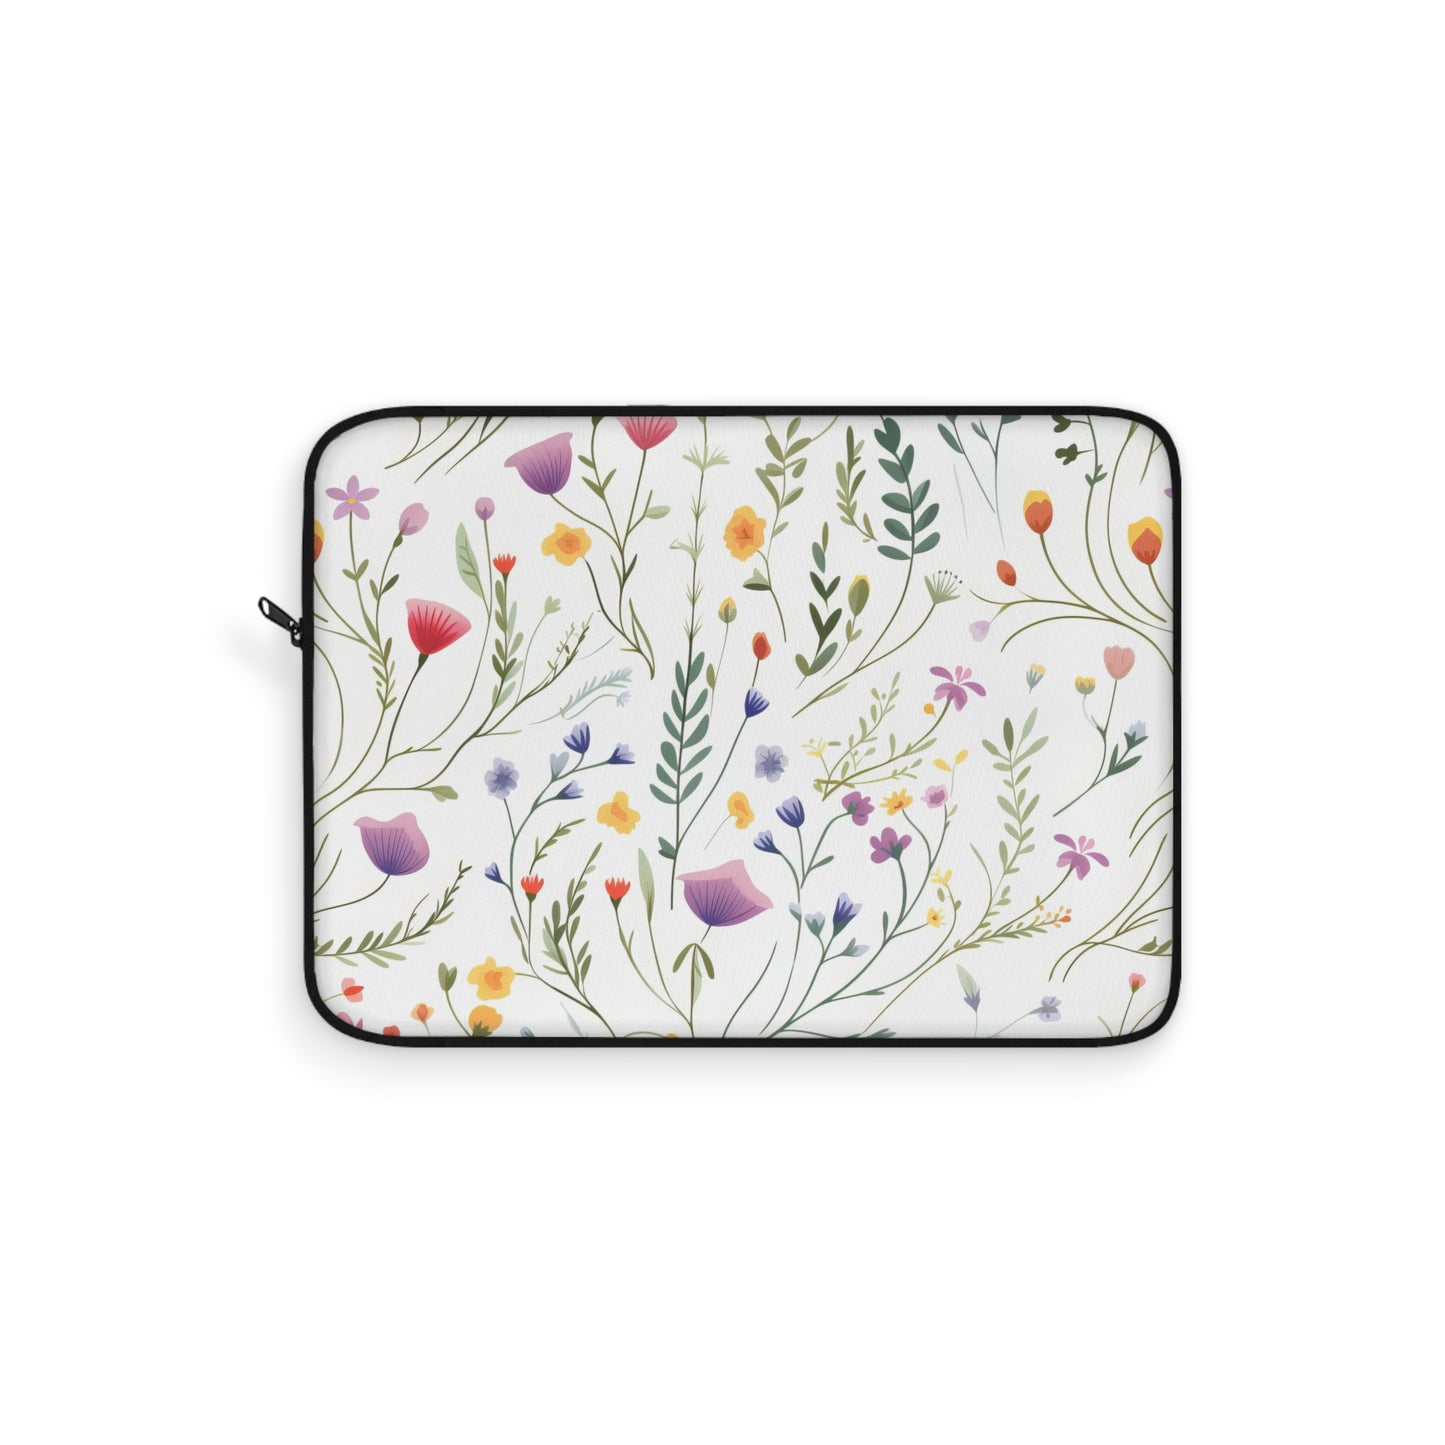 Dainty Wildflowers Laptop Case / Laptop Sleeve